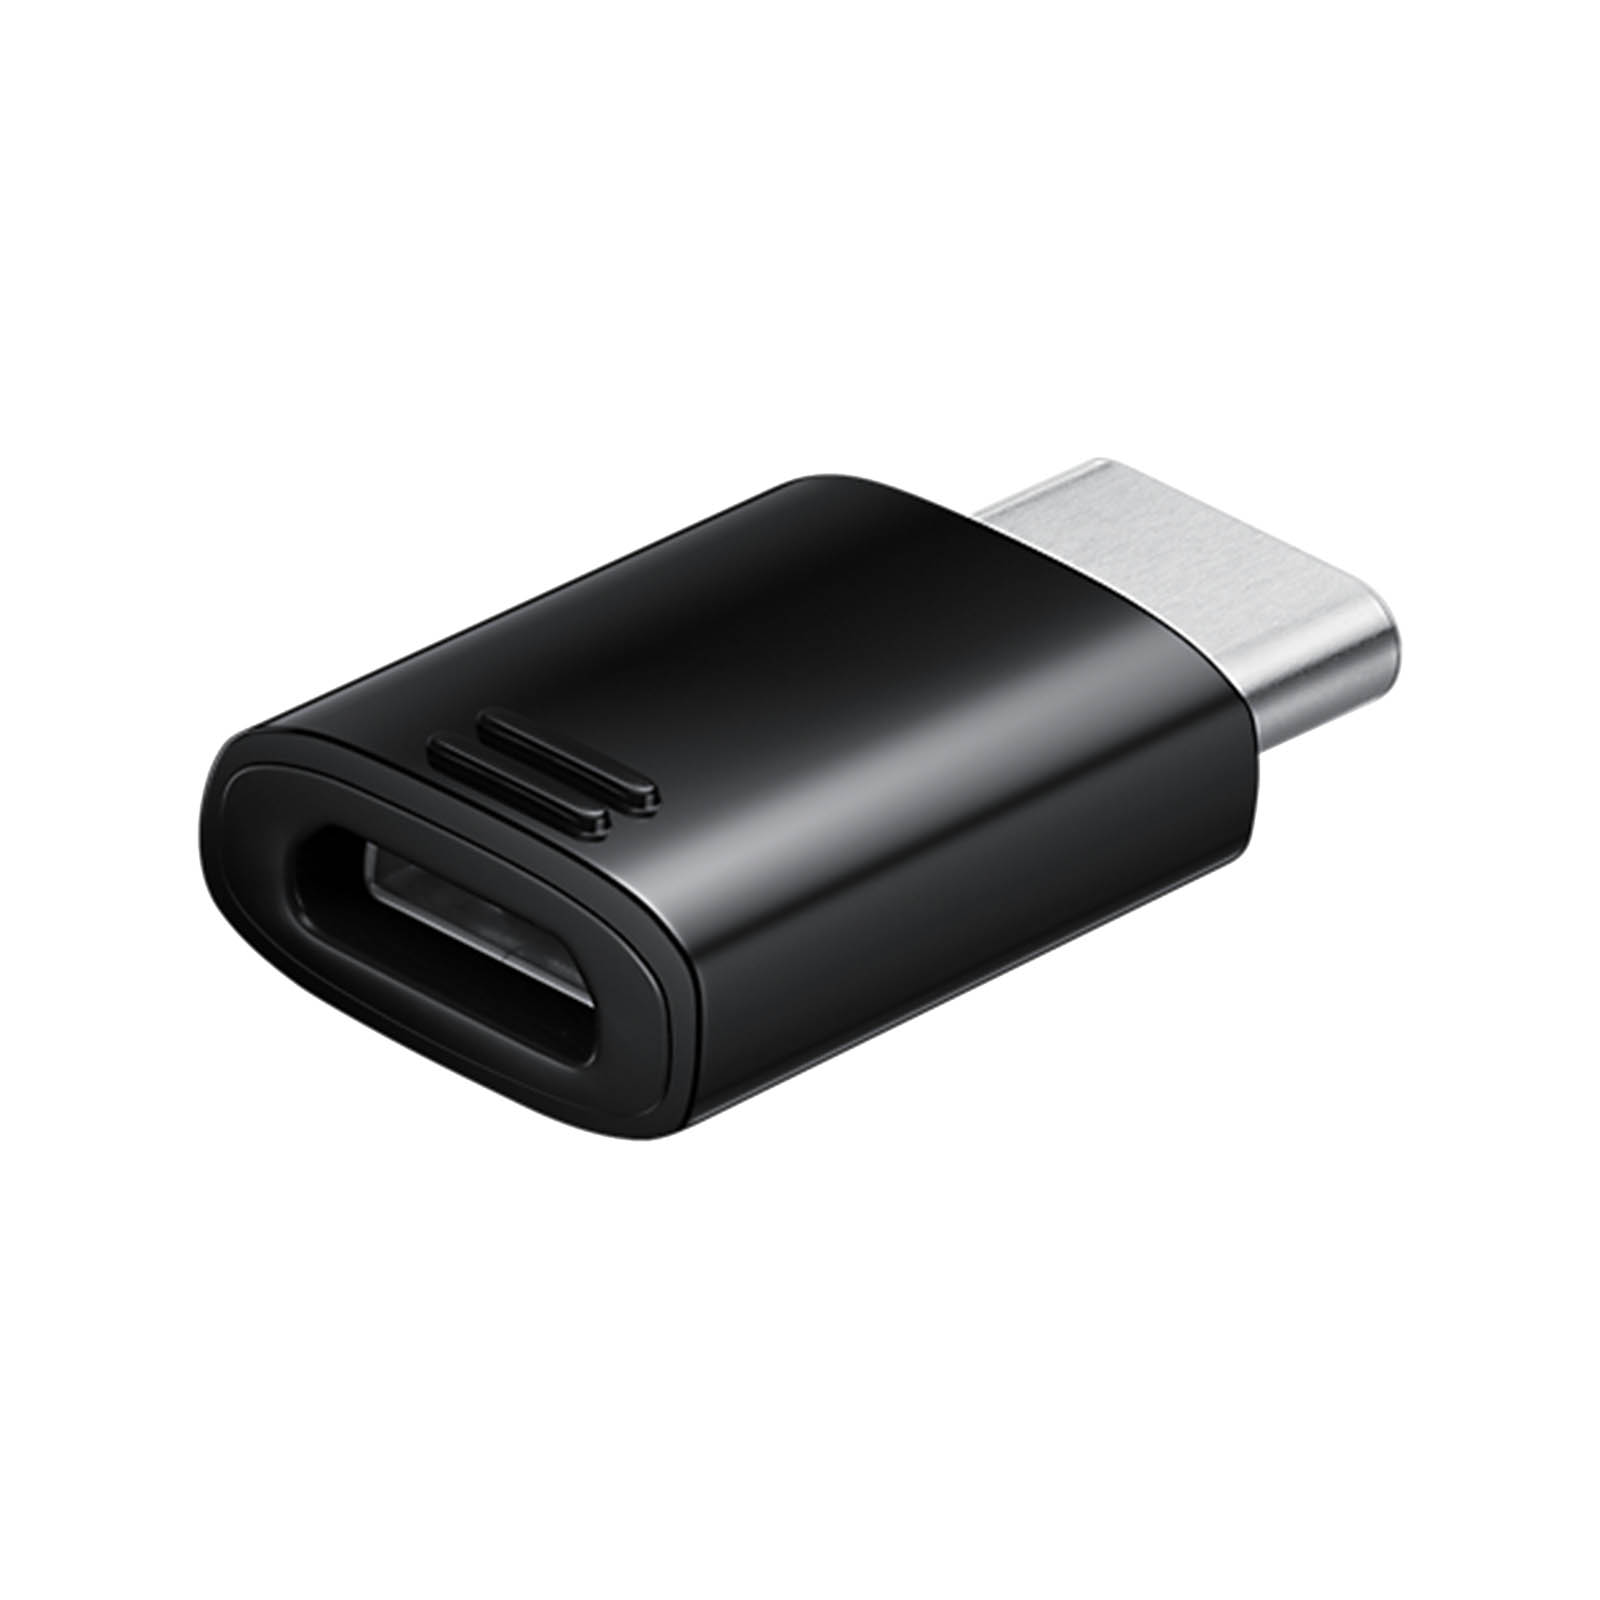 Samsung - Adaptateur USB Type C Vers Micro USB - Blanc (Emballage O